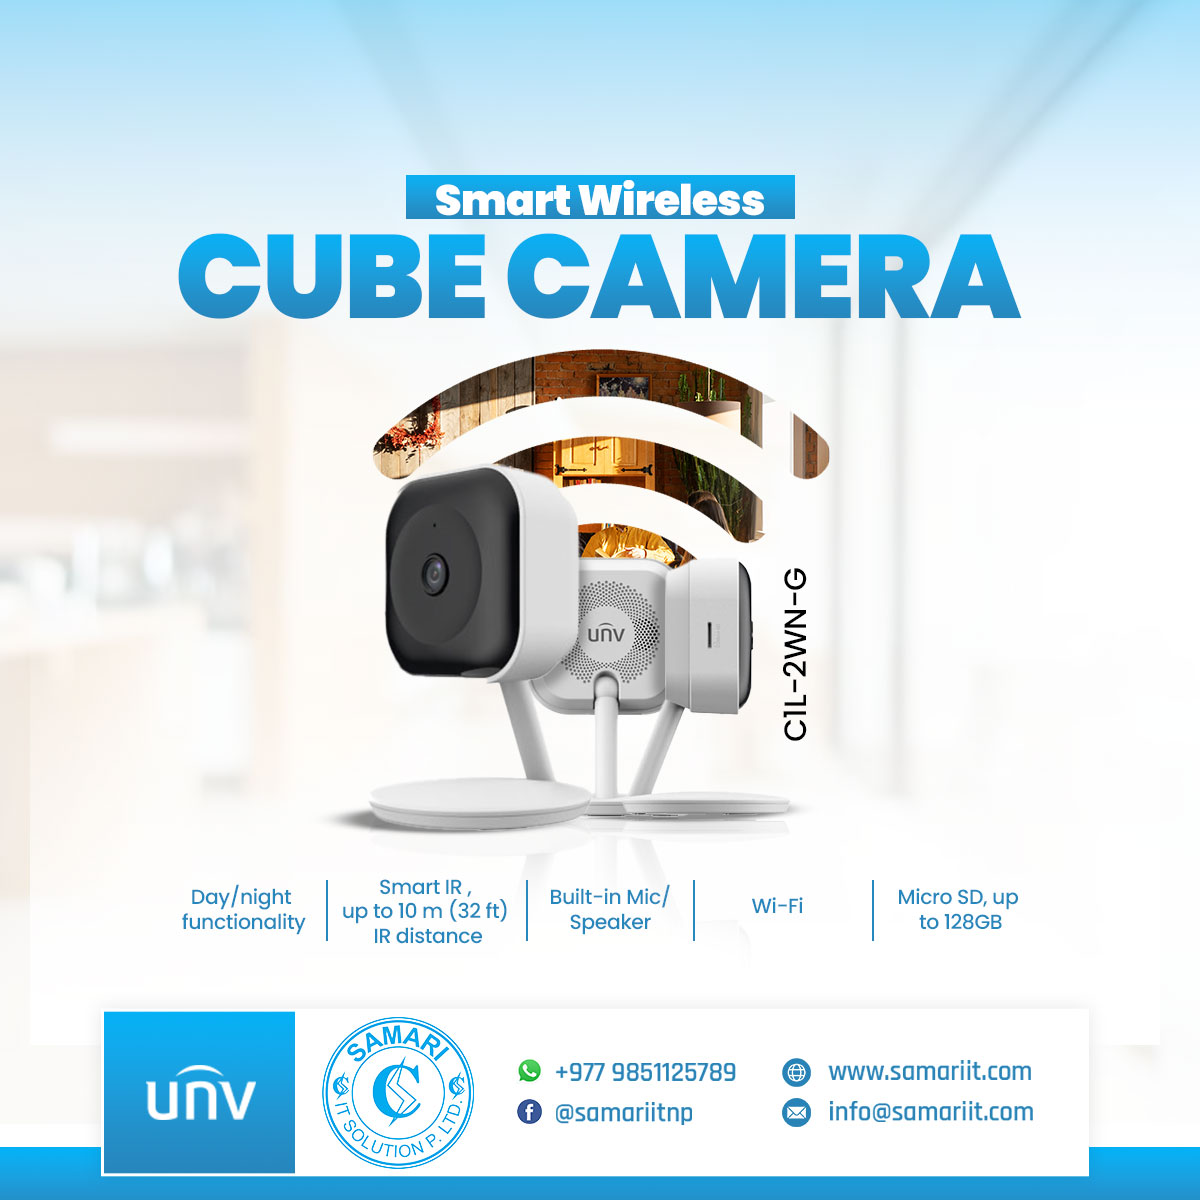 Smart Wireless Cube Camera